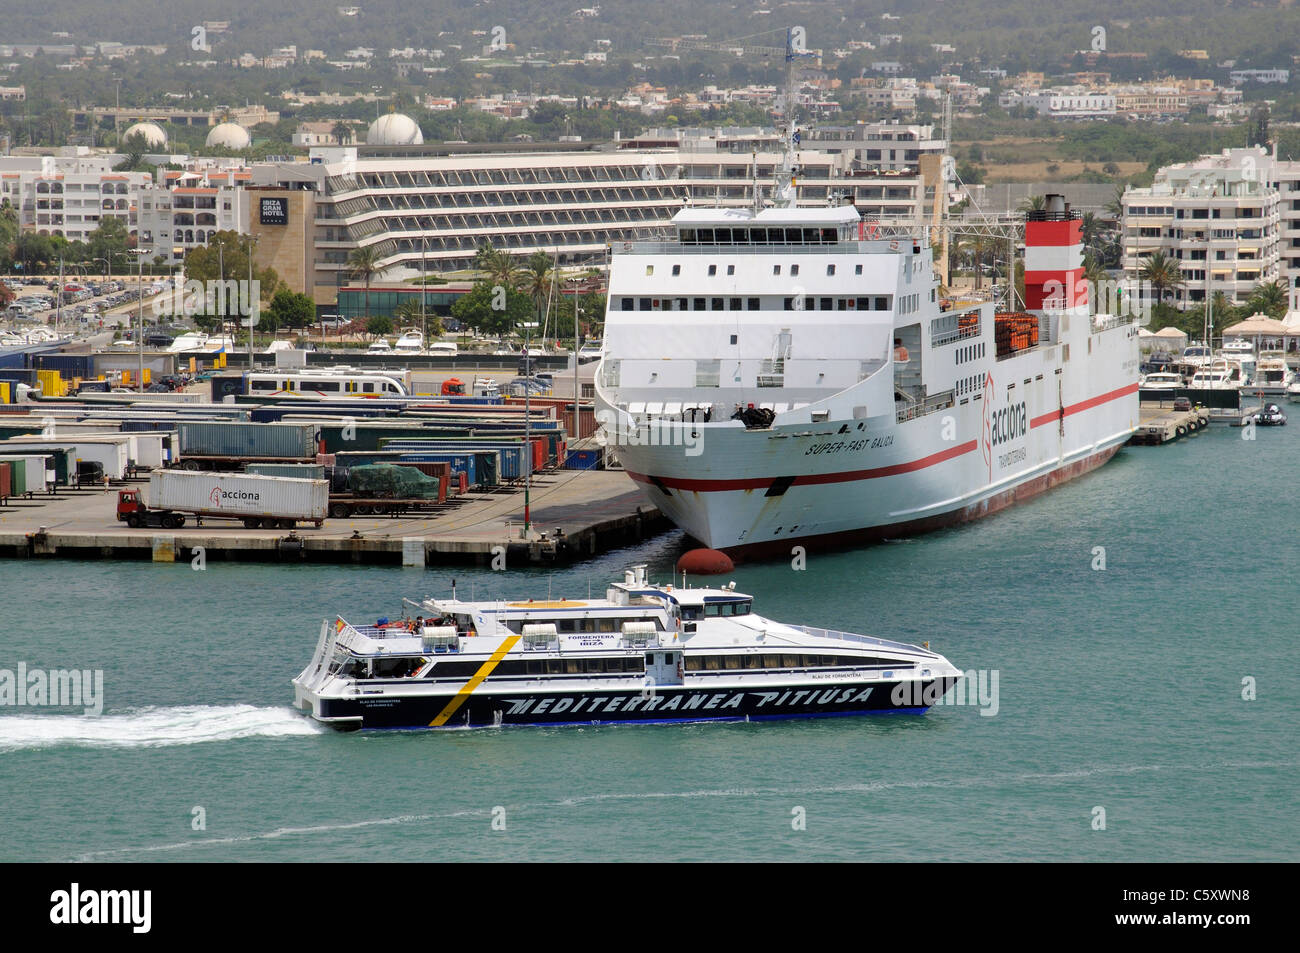 Eivissa port on the Spanish island of Ibiza a fast passenger ferry underway for Formentera island Stock Photo